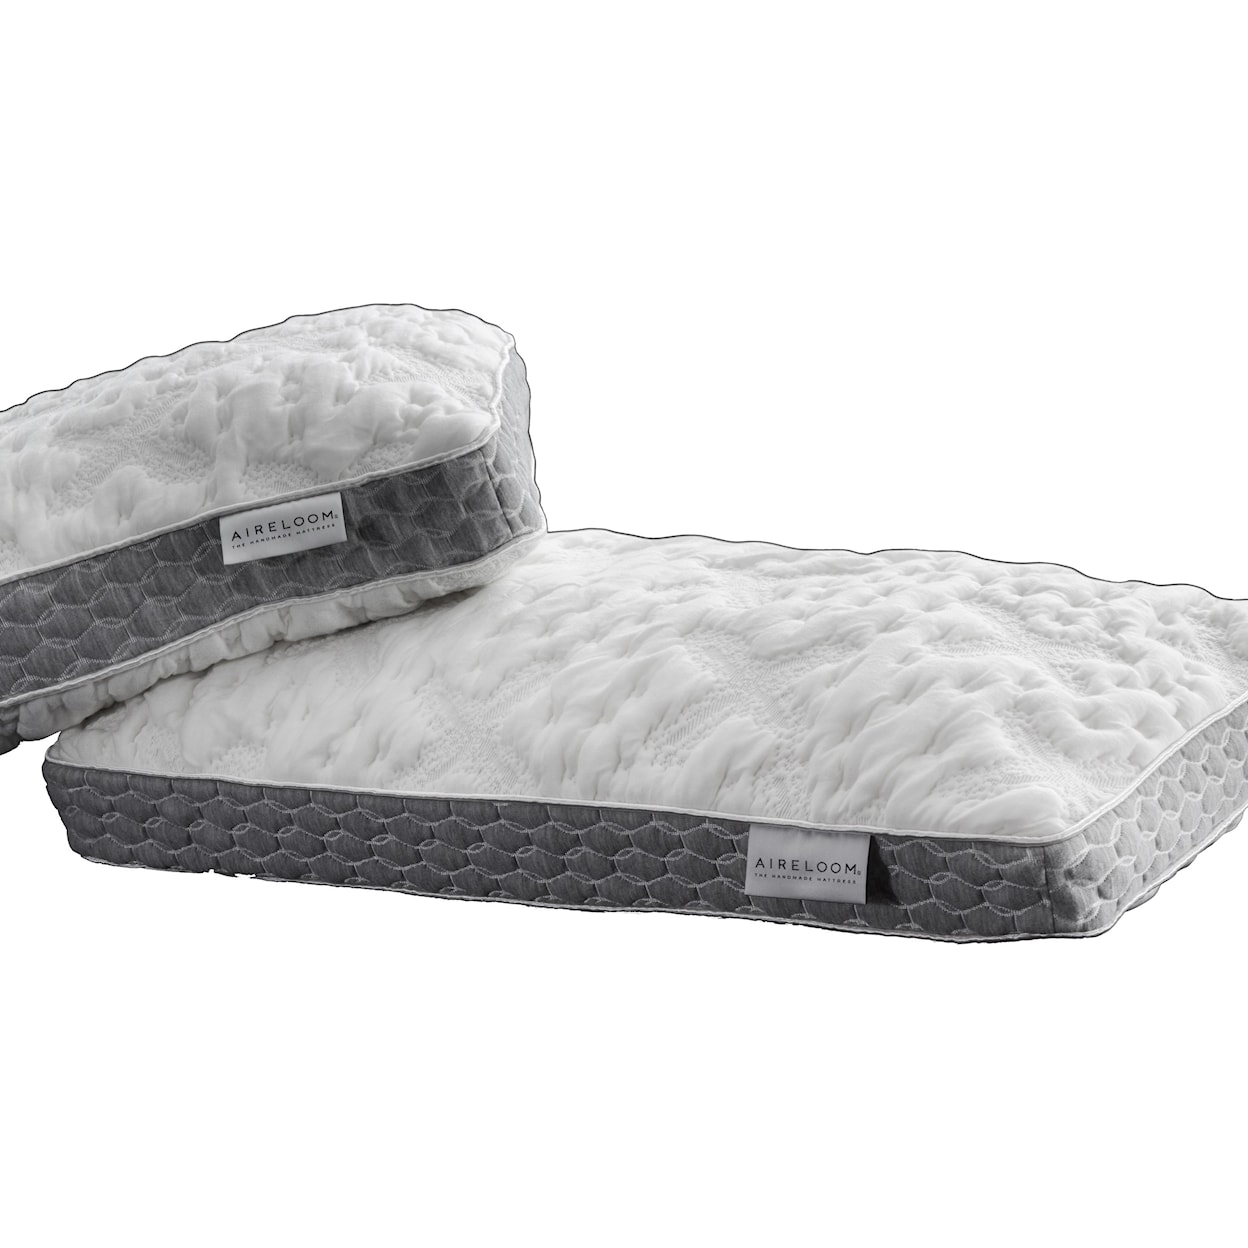 Aireloom Bedding Aspire Luxury Pillow Aspire Handmade Luxury Pillow